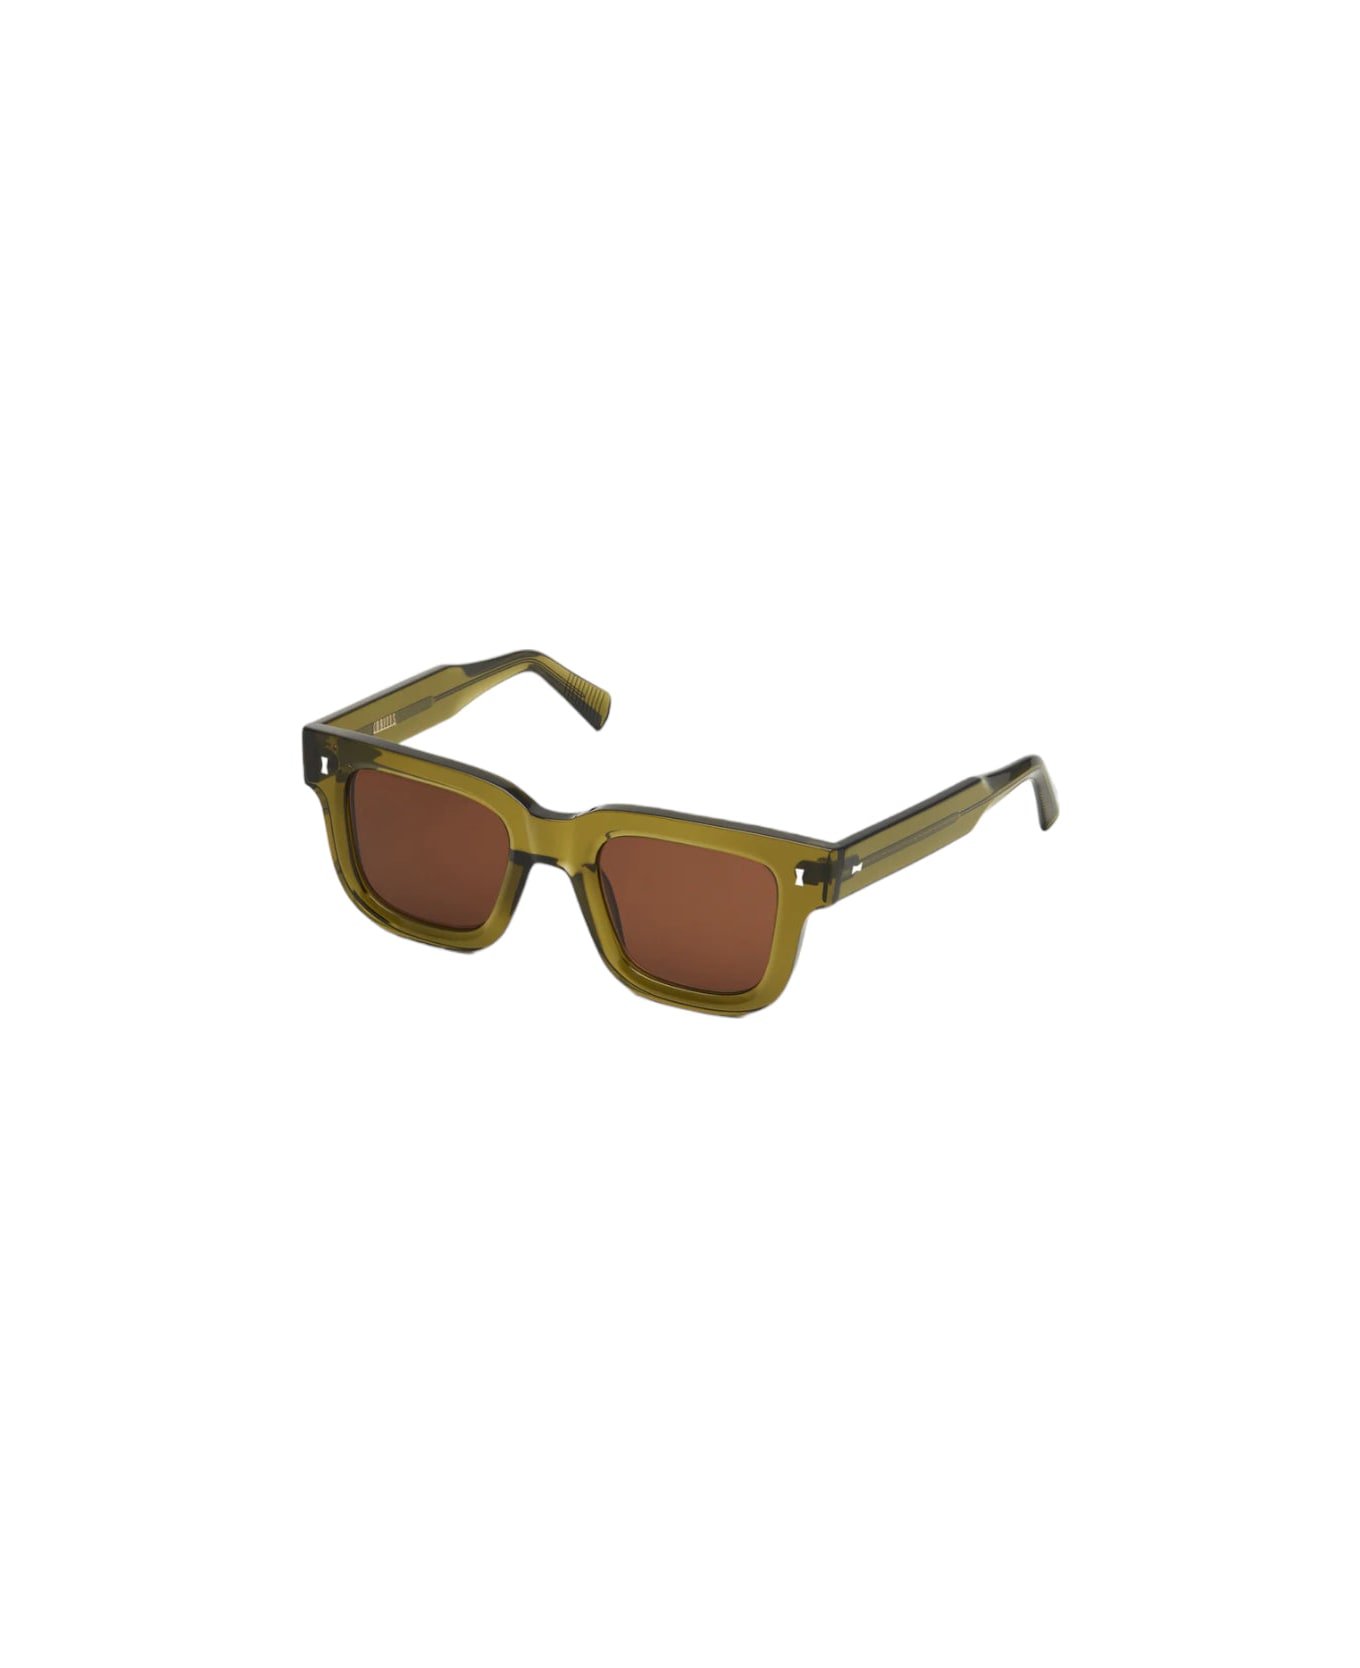 Cubitts Plender - Crystal Green Sunglasses サングラス